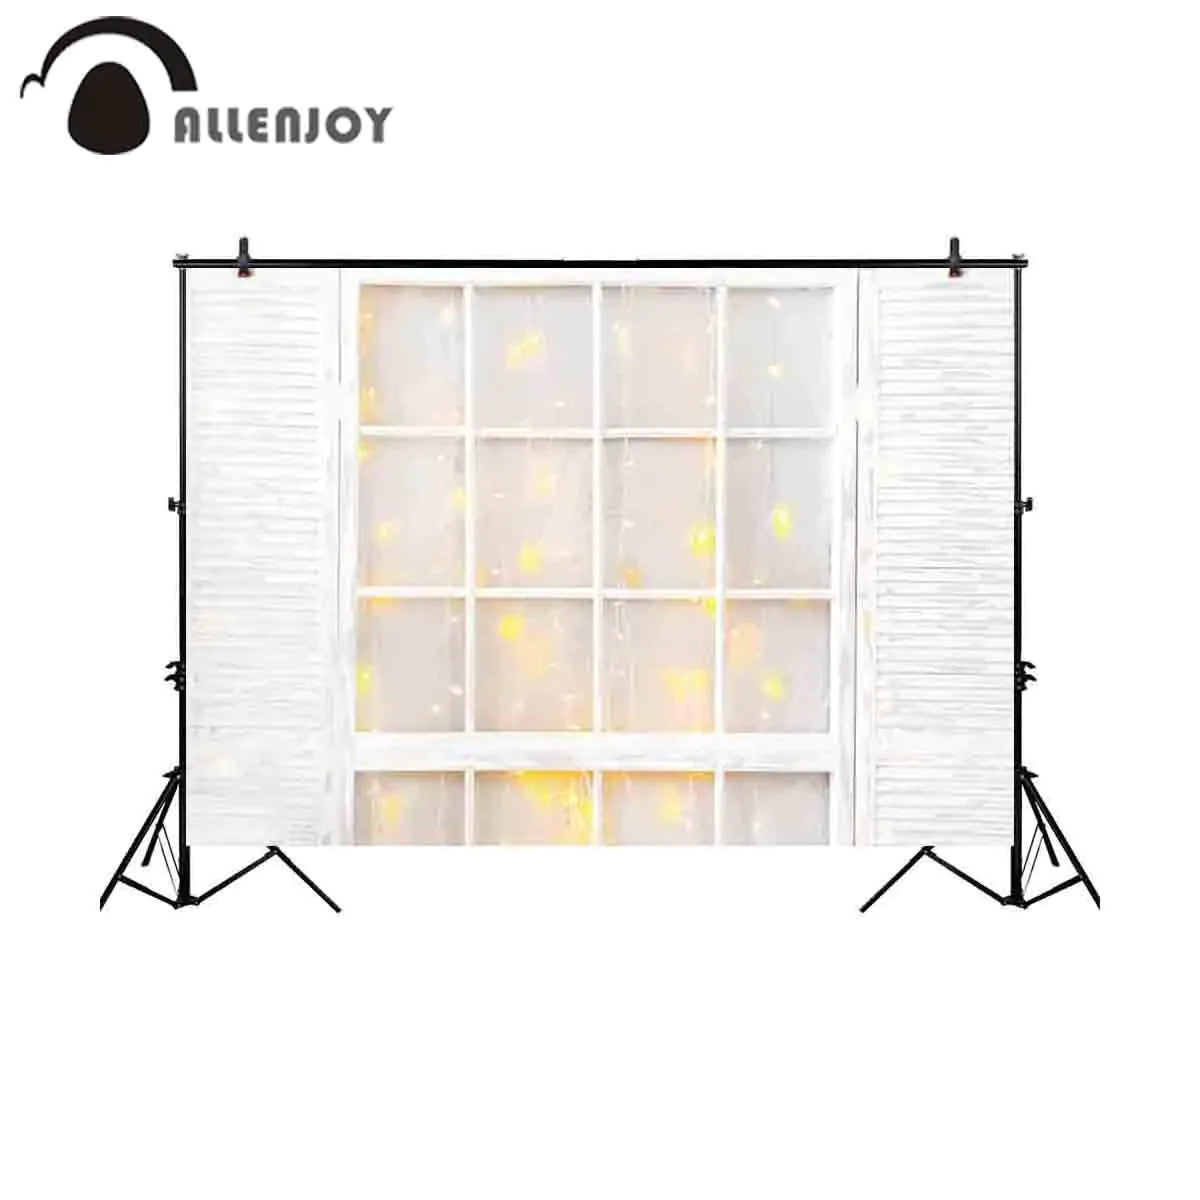 Allenjoy White Shutters Window Backdrop Christmas Baby Shower Background Photobooth - Allenjoystudio